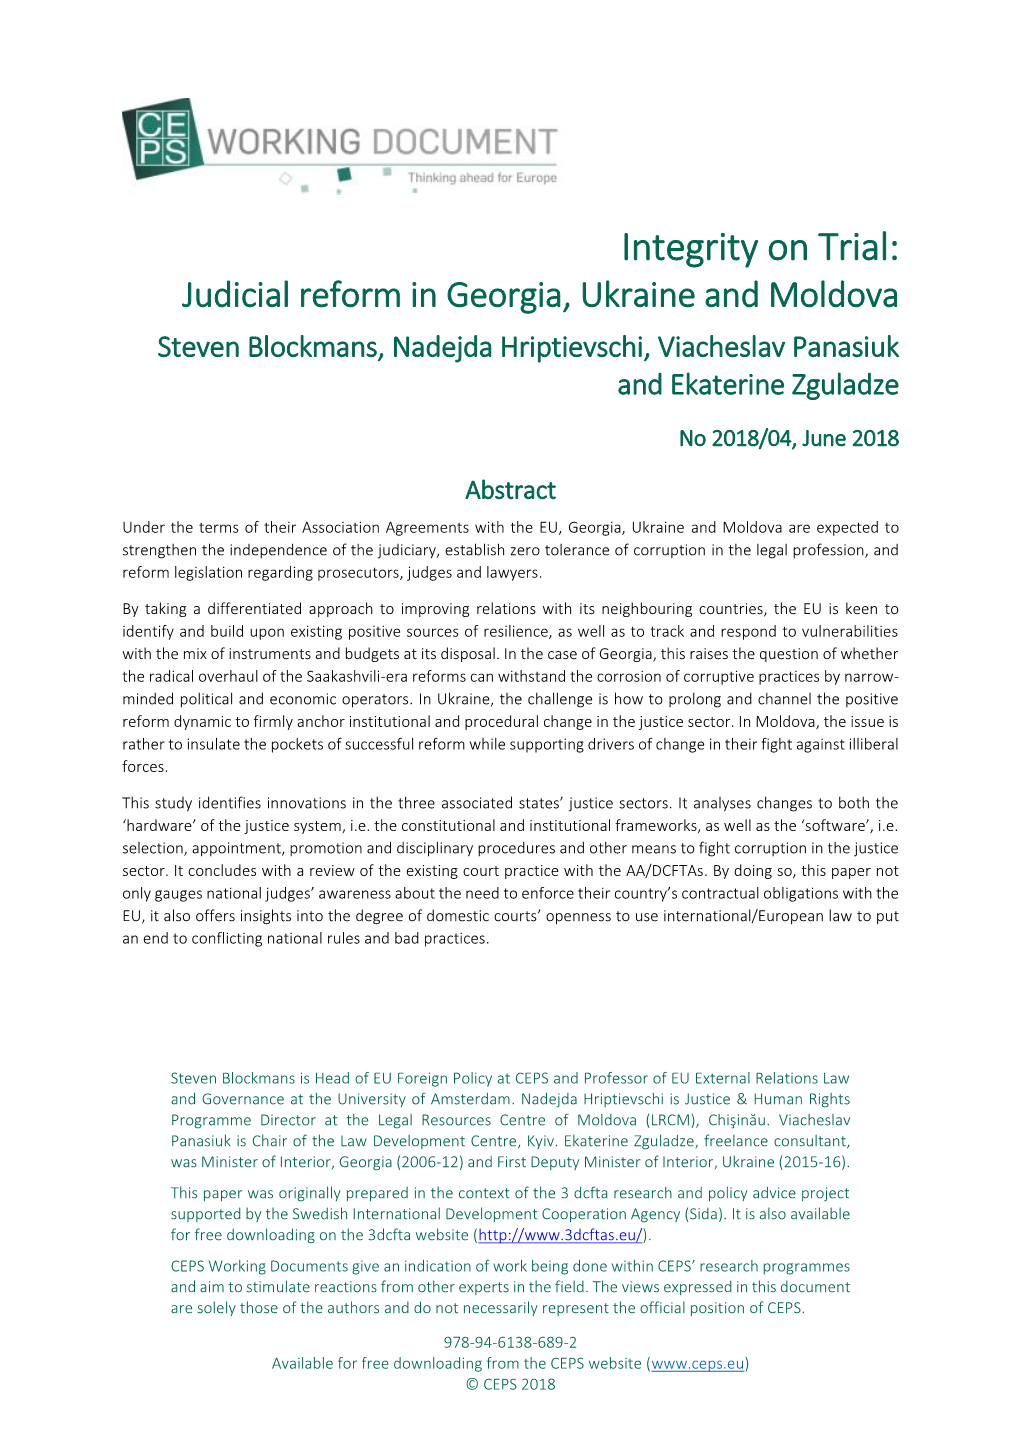 Integrity on Trial: Judicial Reform in Georgia, Ukraine and Moldova Steven Blockmans, Nadejda Hriptievschi, Viacheslav Panasiuk and Ekaterine Zguladze